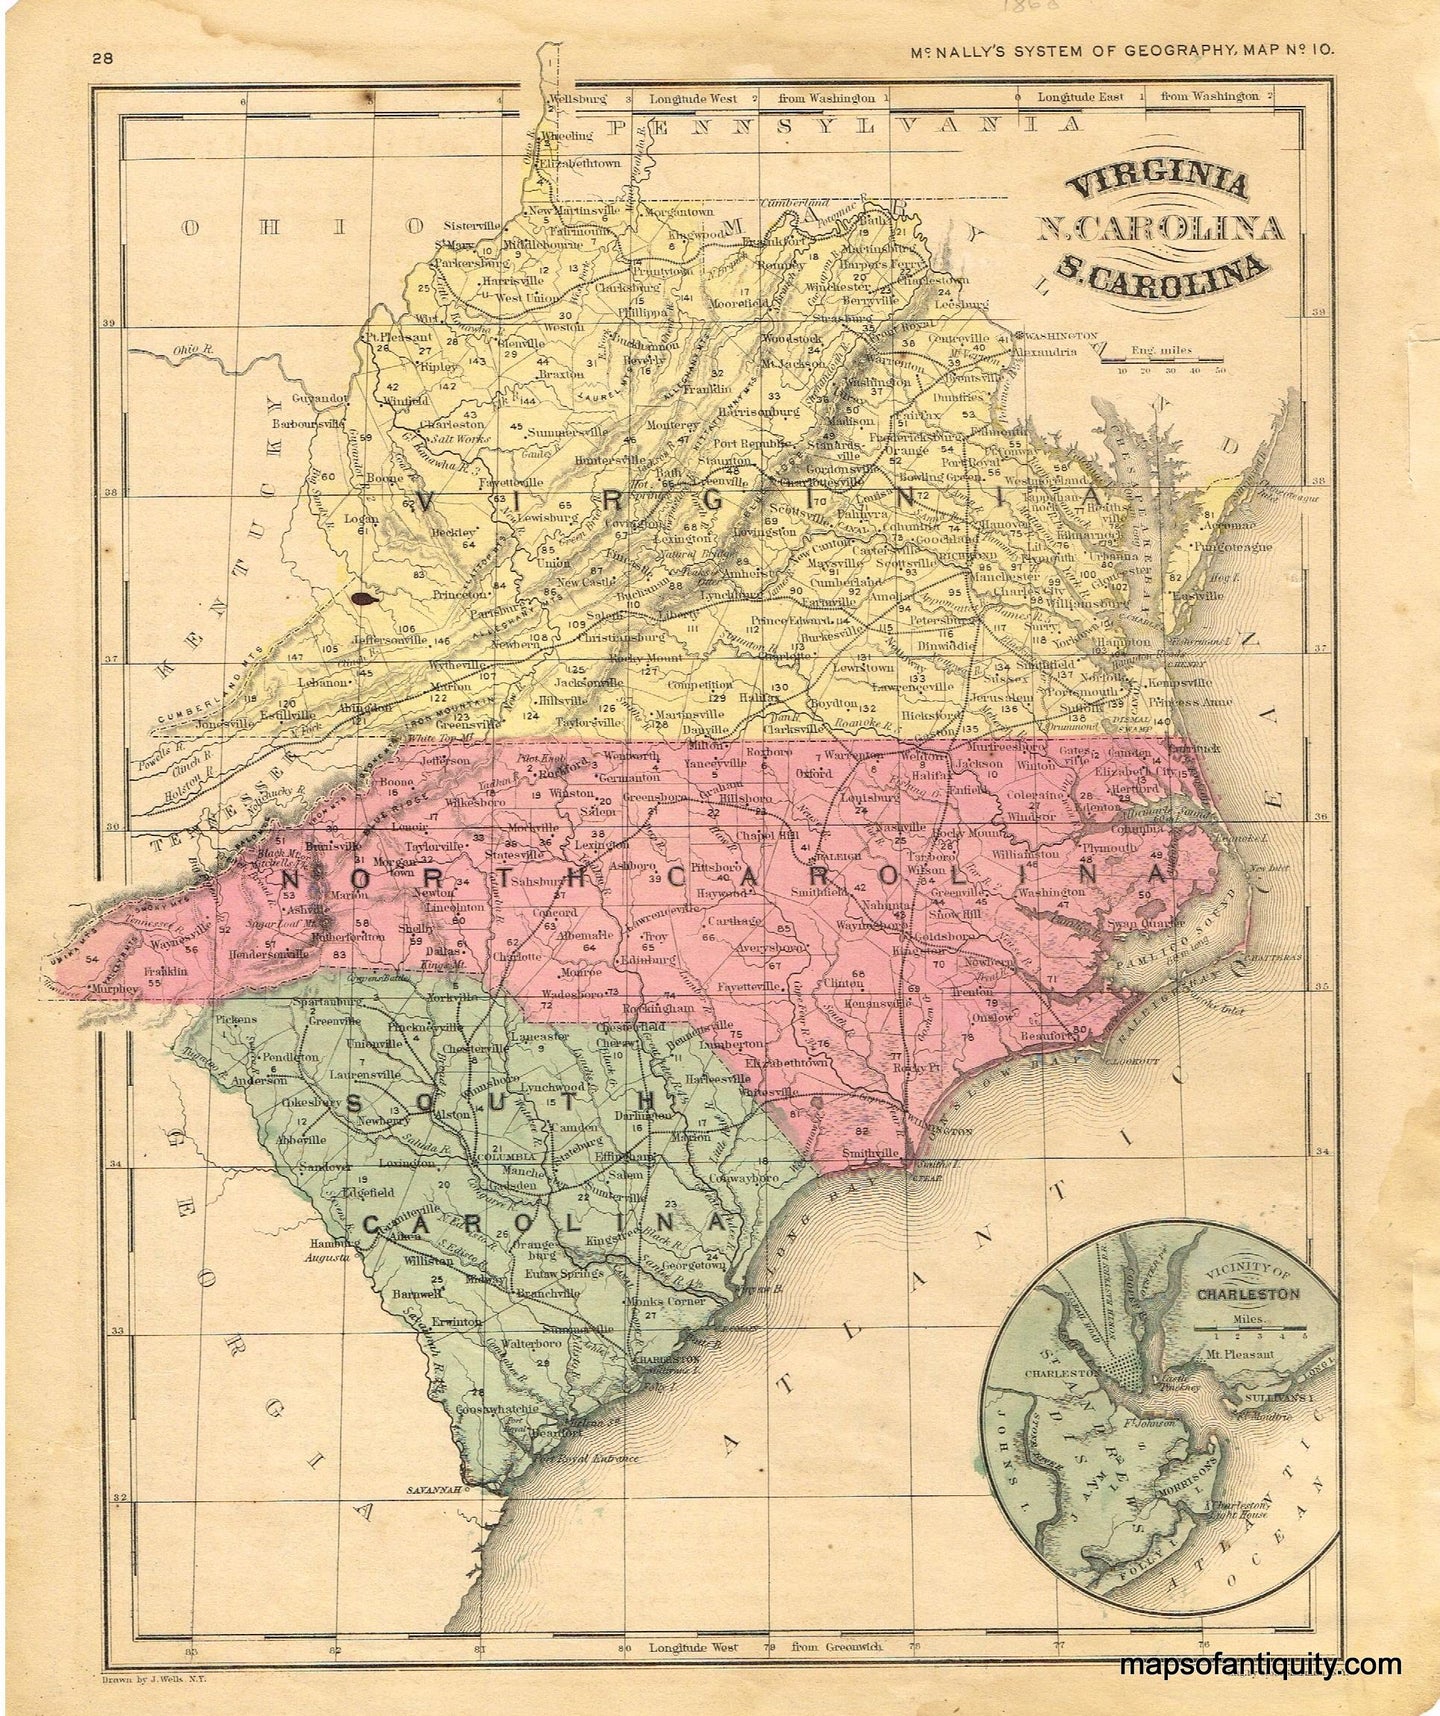 Antique-Hand-Colored-Map-Virginia-North-Carolina-South-Carolina***********-United-States-South-1860-McNally-Maps-Of-Antiquity